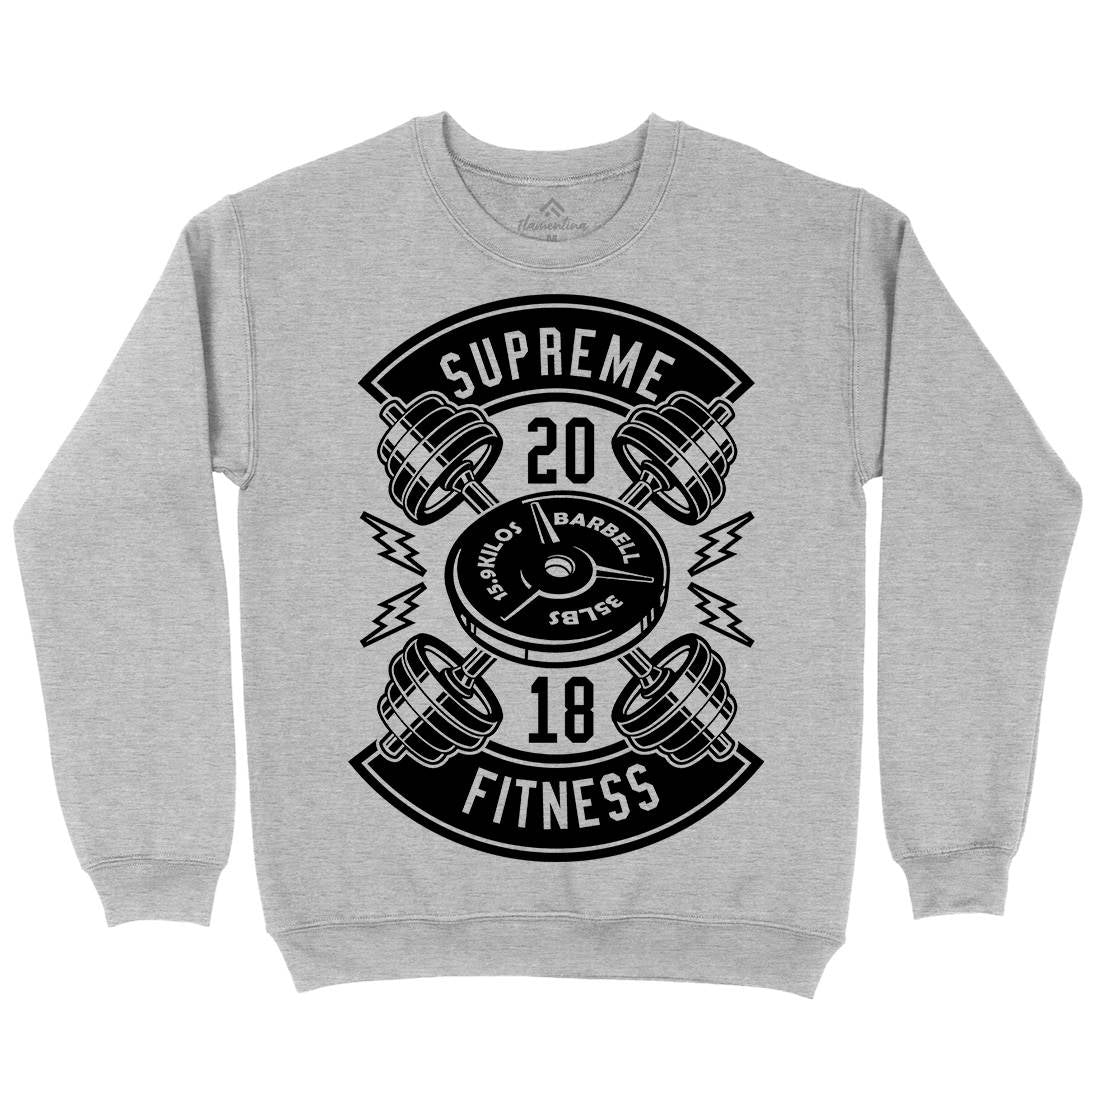 Supreme Fitness Kids Crew Neck Sweatshirt Gym B646